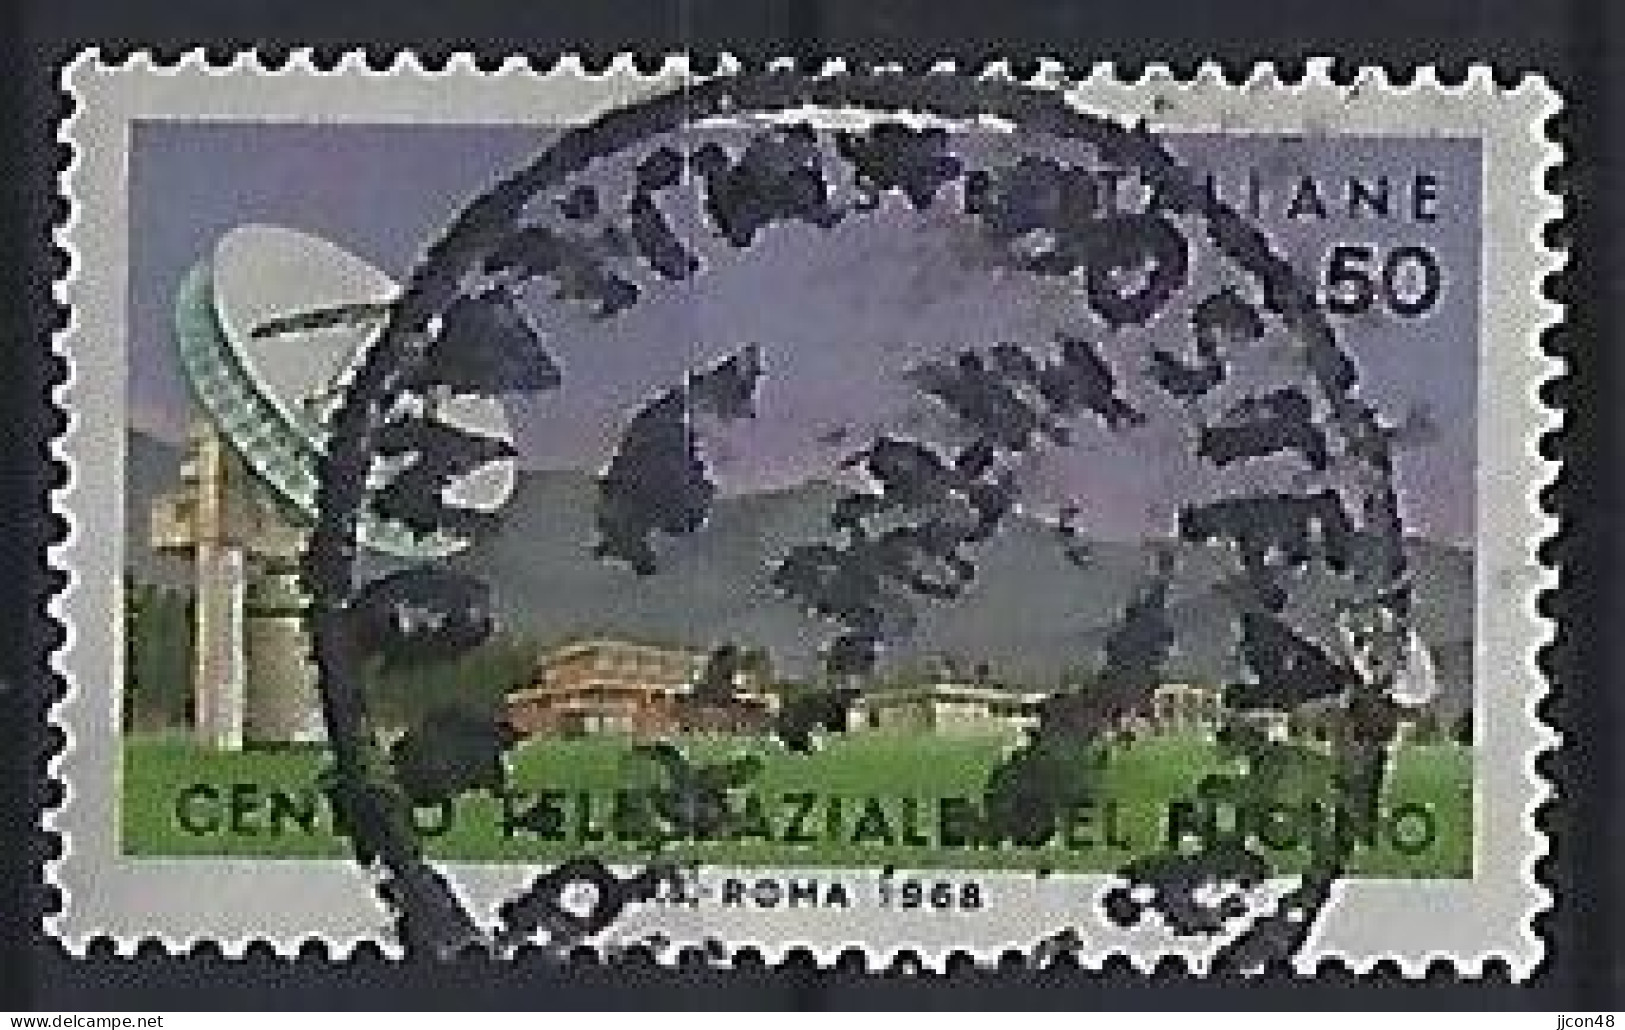 Italy 1968  Satellitenstation Auf Der Piana Del Fucino (o) Mi.1290 - 1961-70: Oblitérés